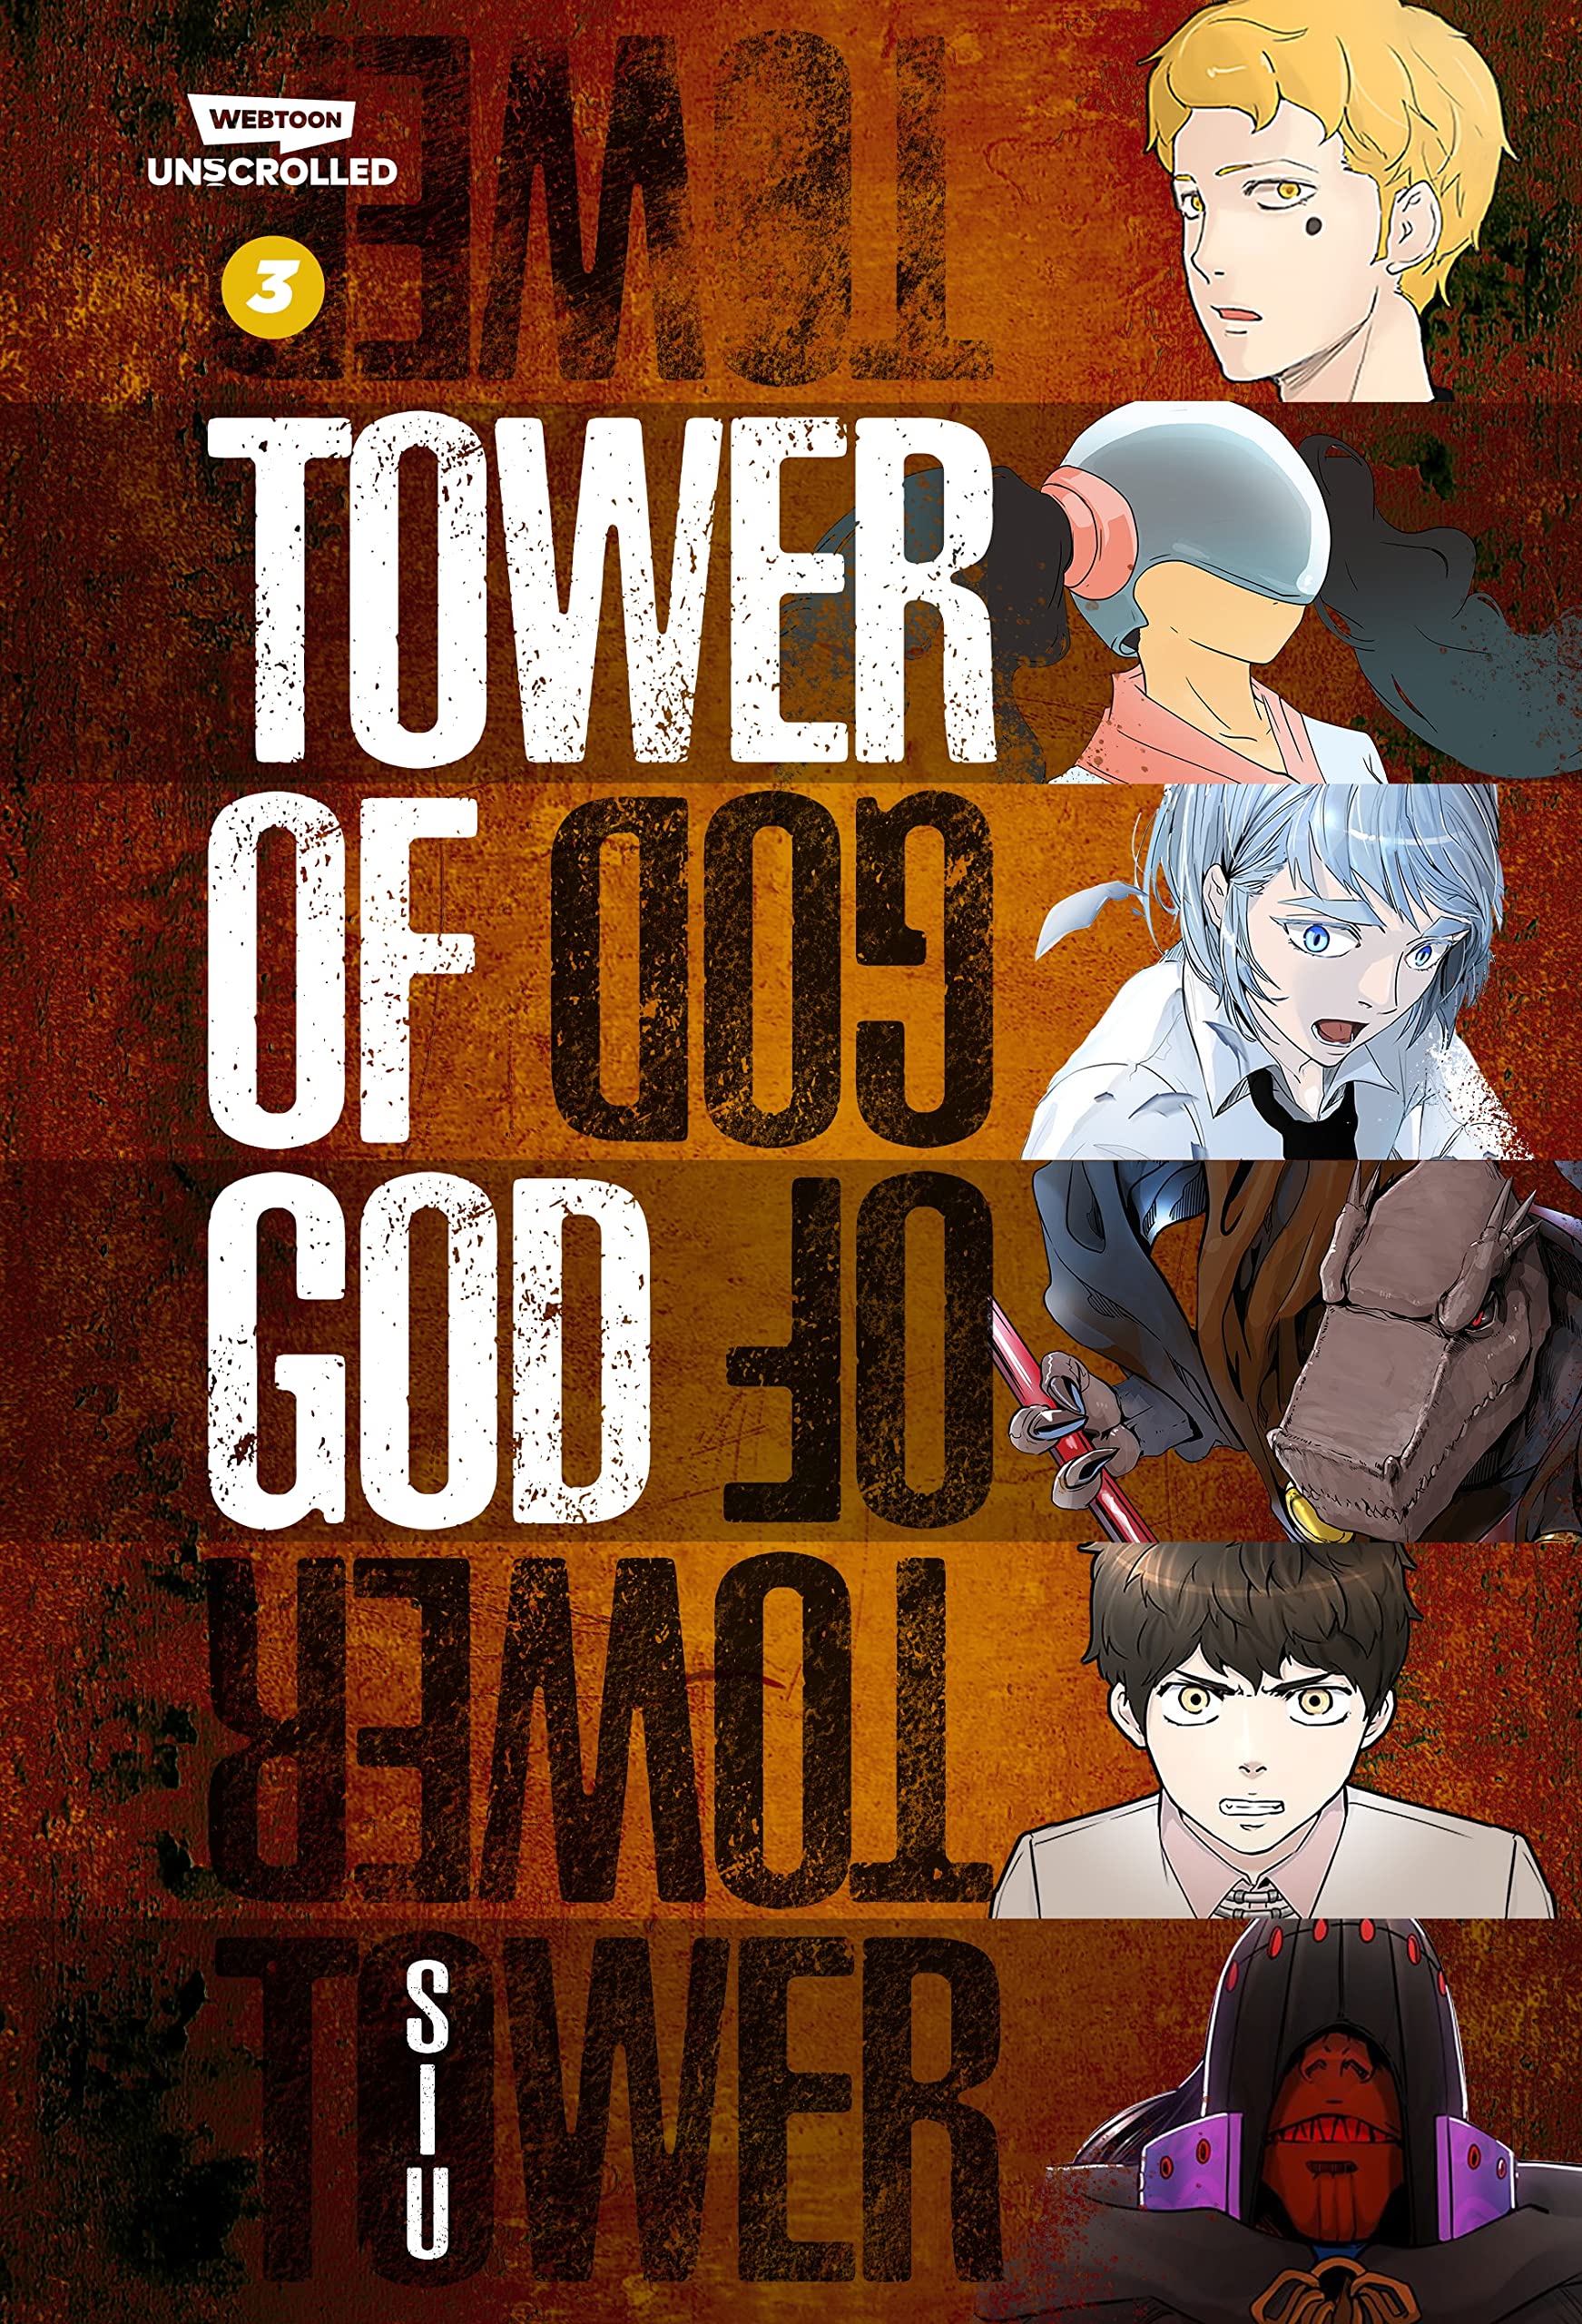 What is Tower of God? The Korean Webtoon Explained